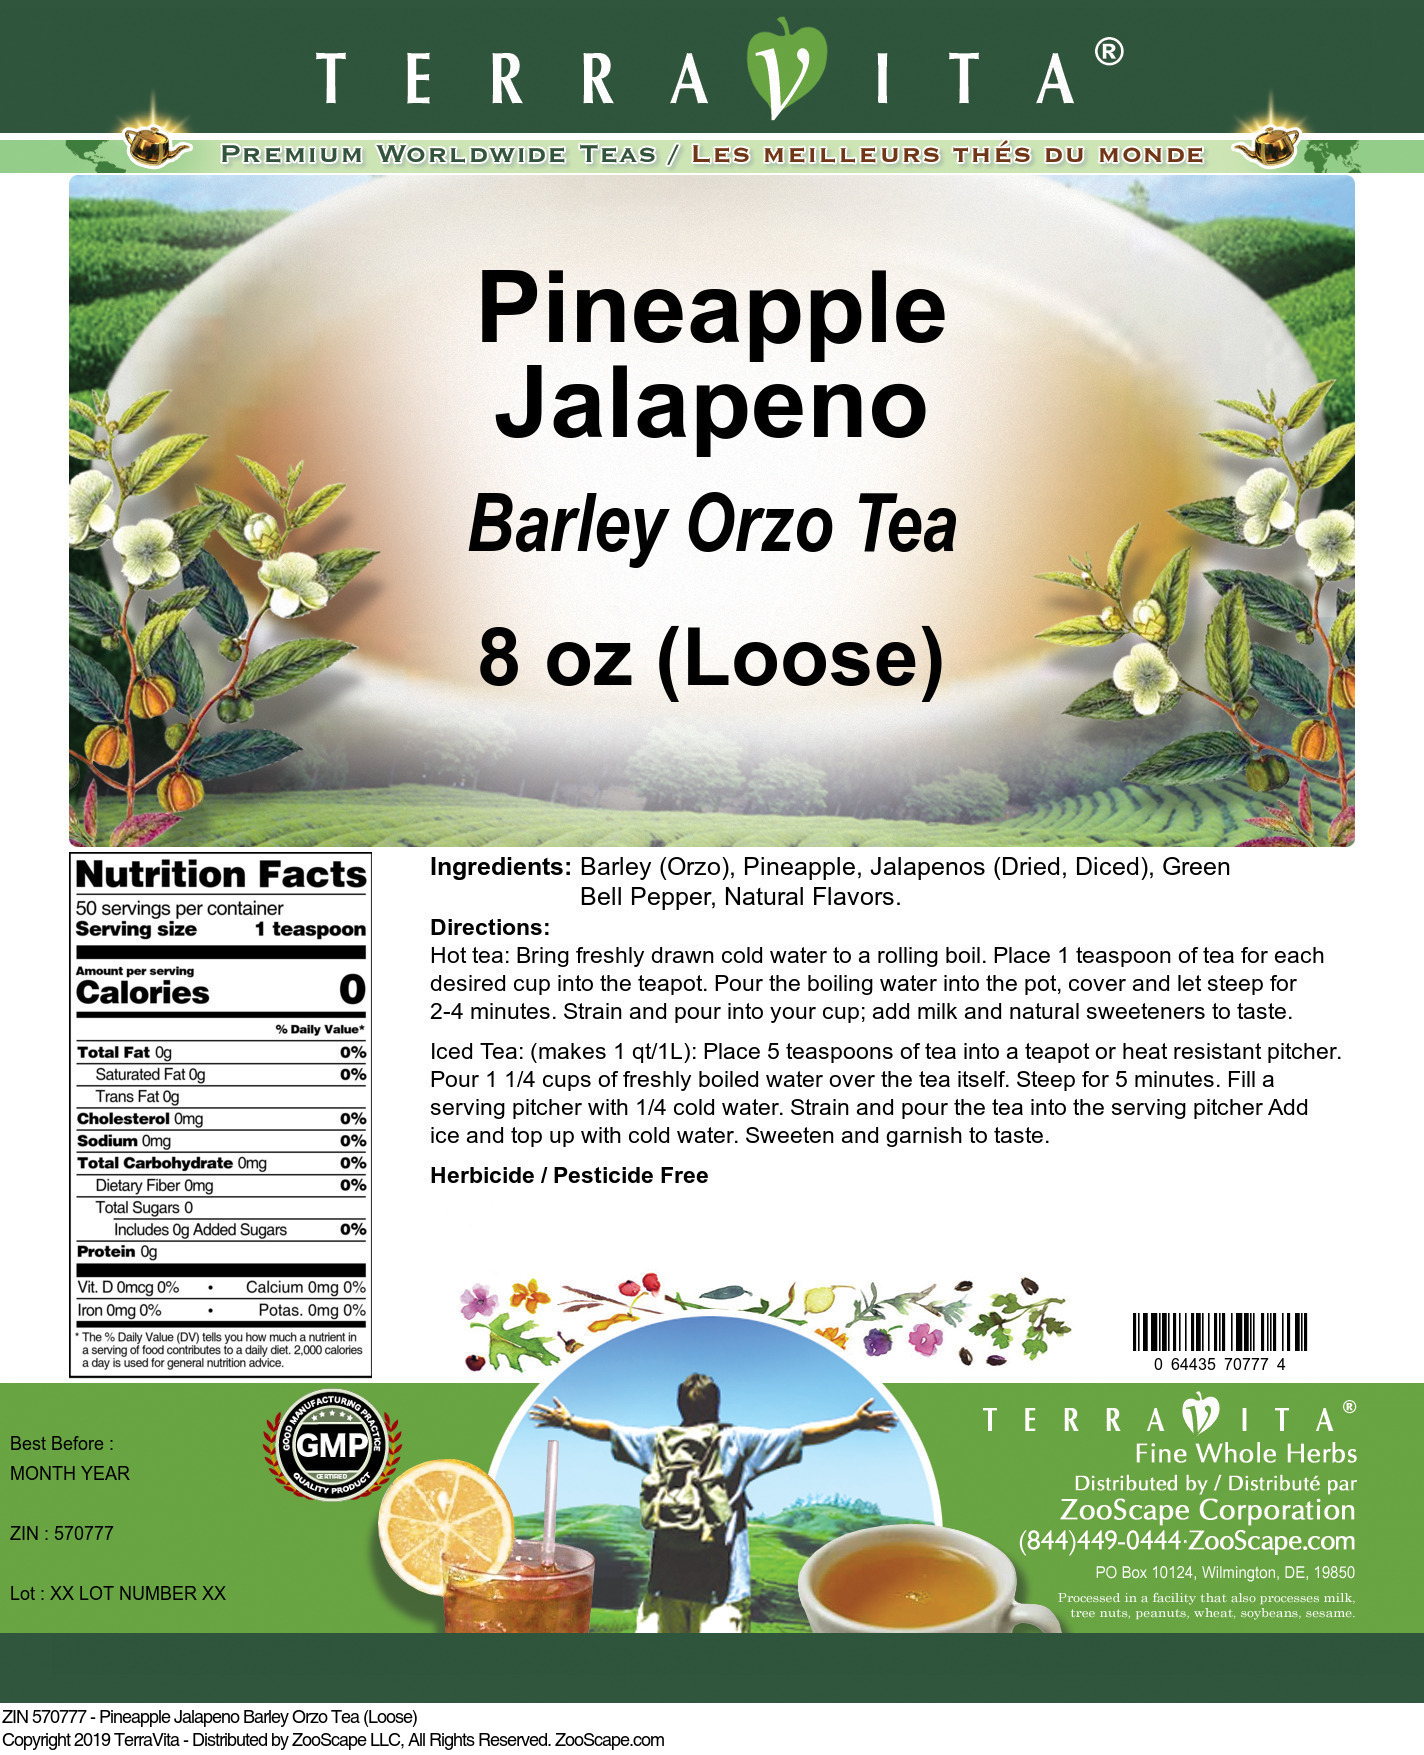 Pineapple Jalapeno Barley Orzo Tea (Loose) - Label